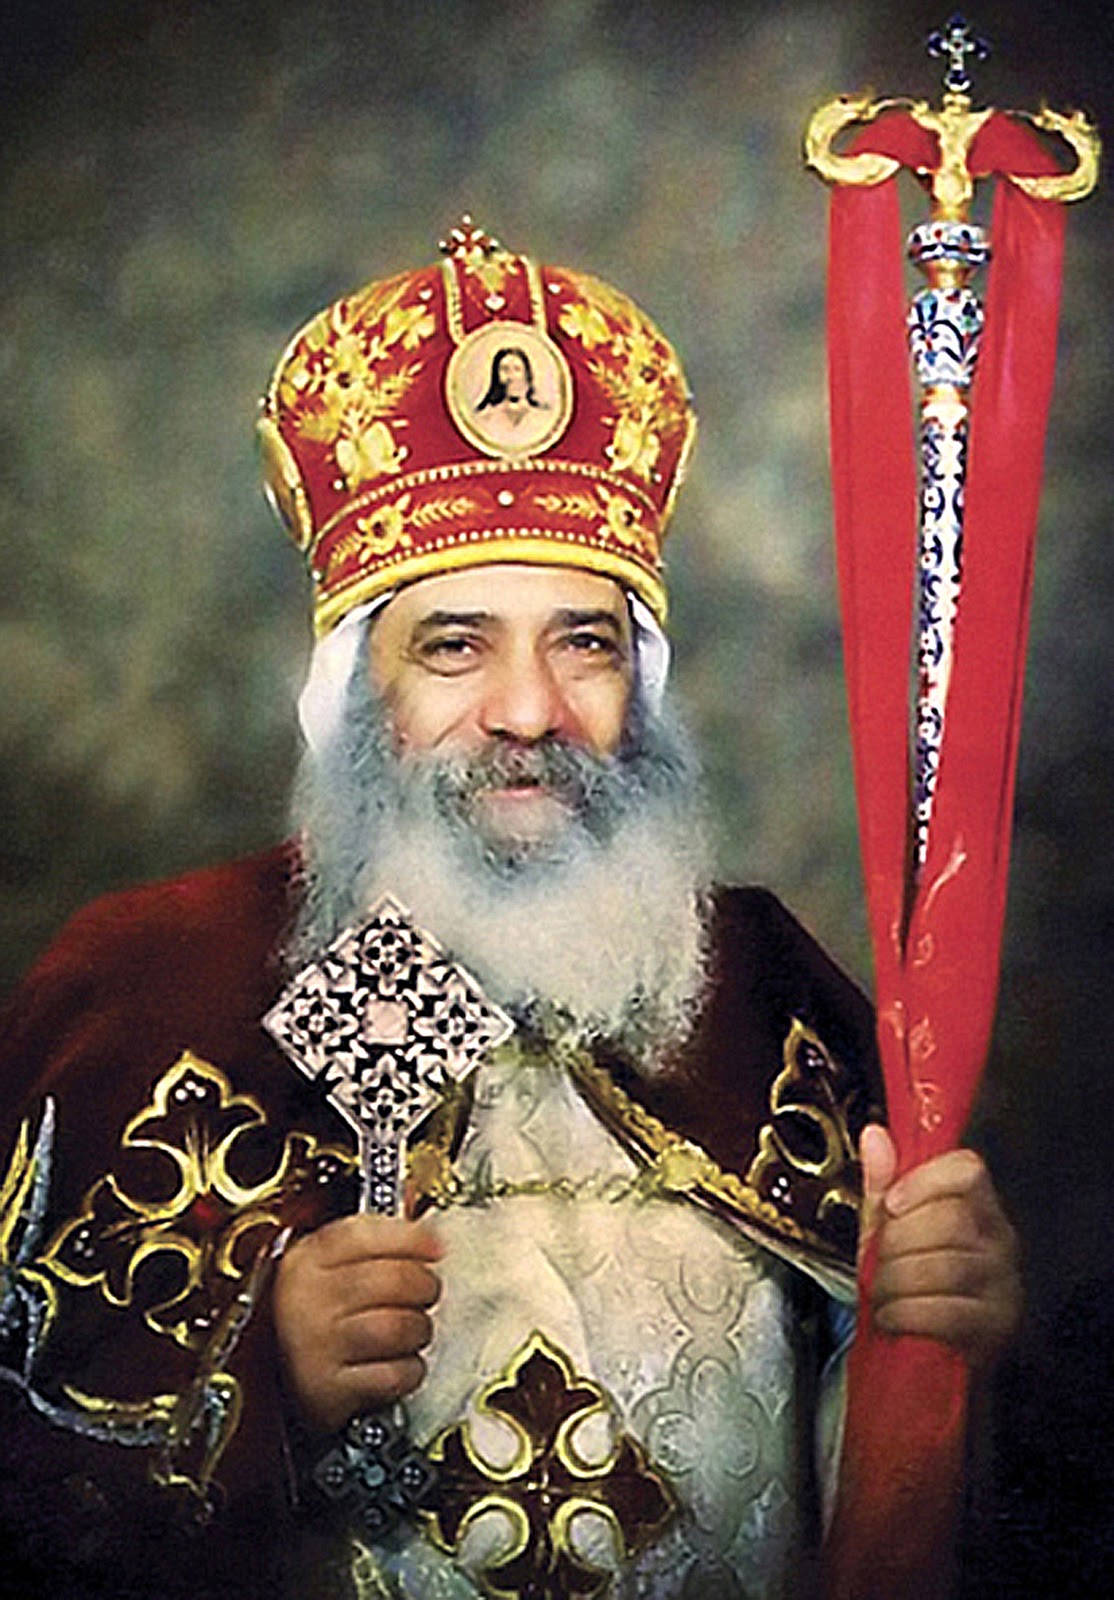 Egypt’s coptic church commemorates late Pope Shenouda